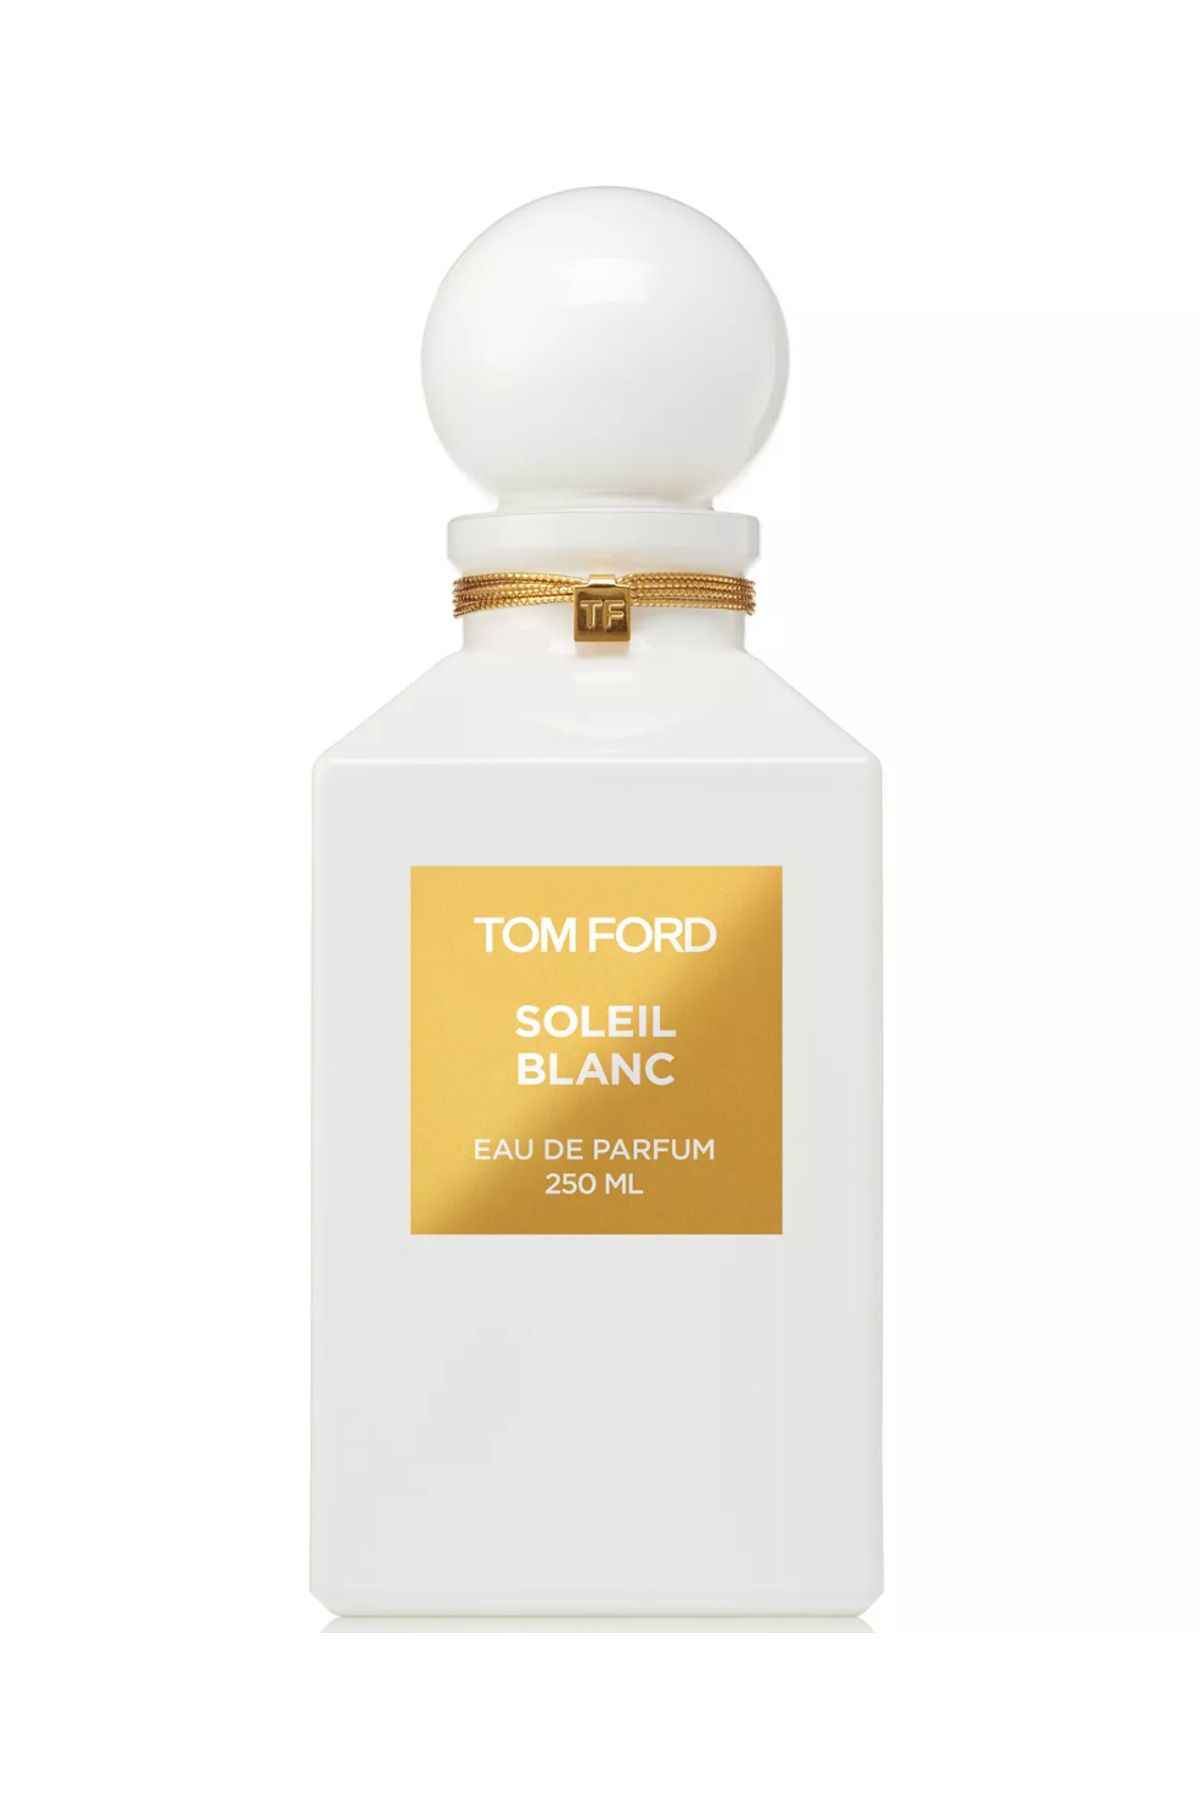 Tom Ford Soleil Blanc Eau de Parfum 250 Ml